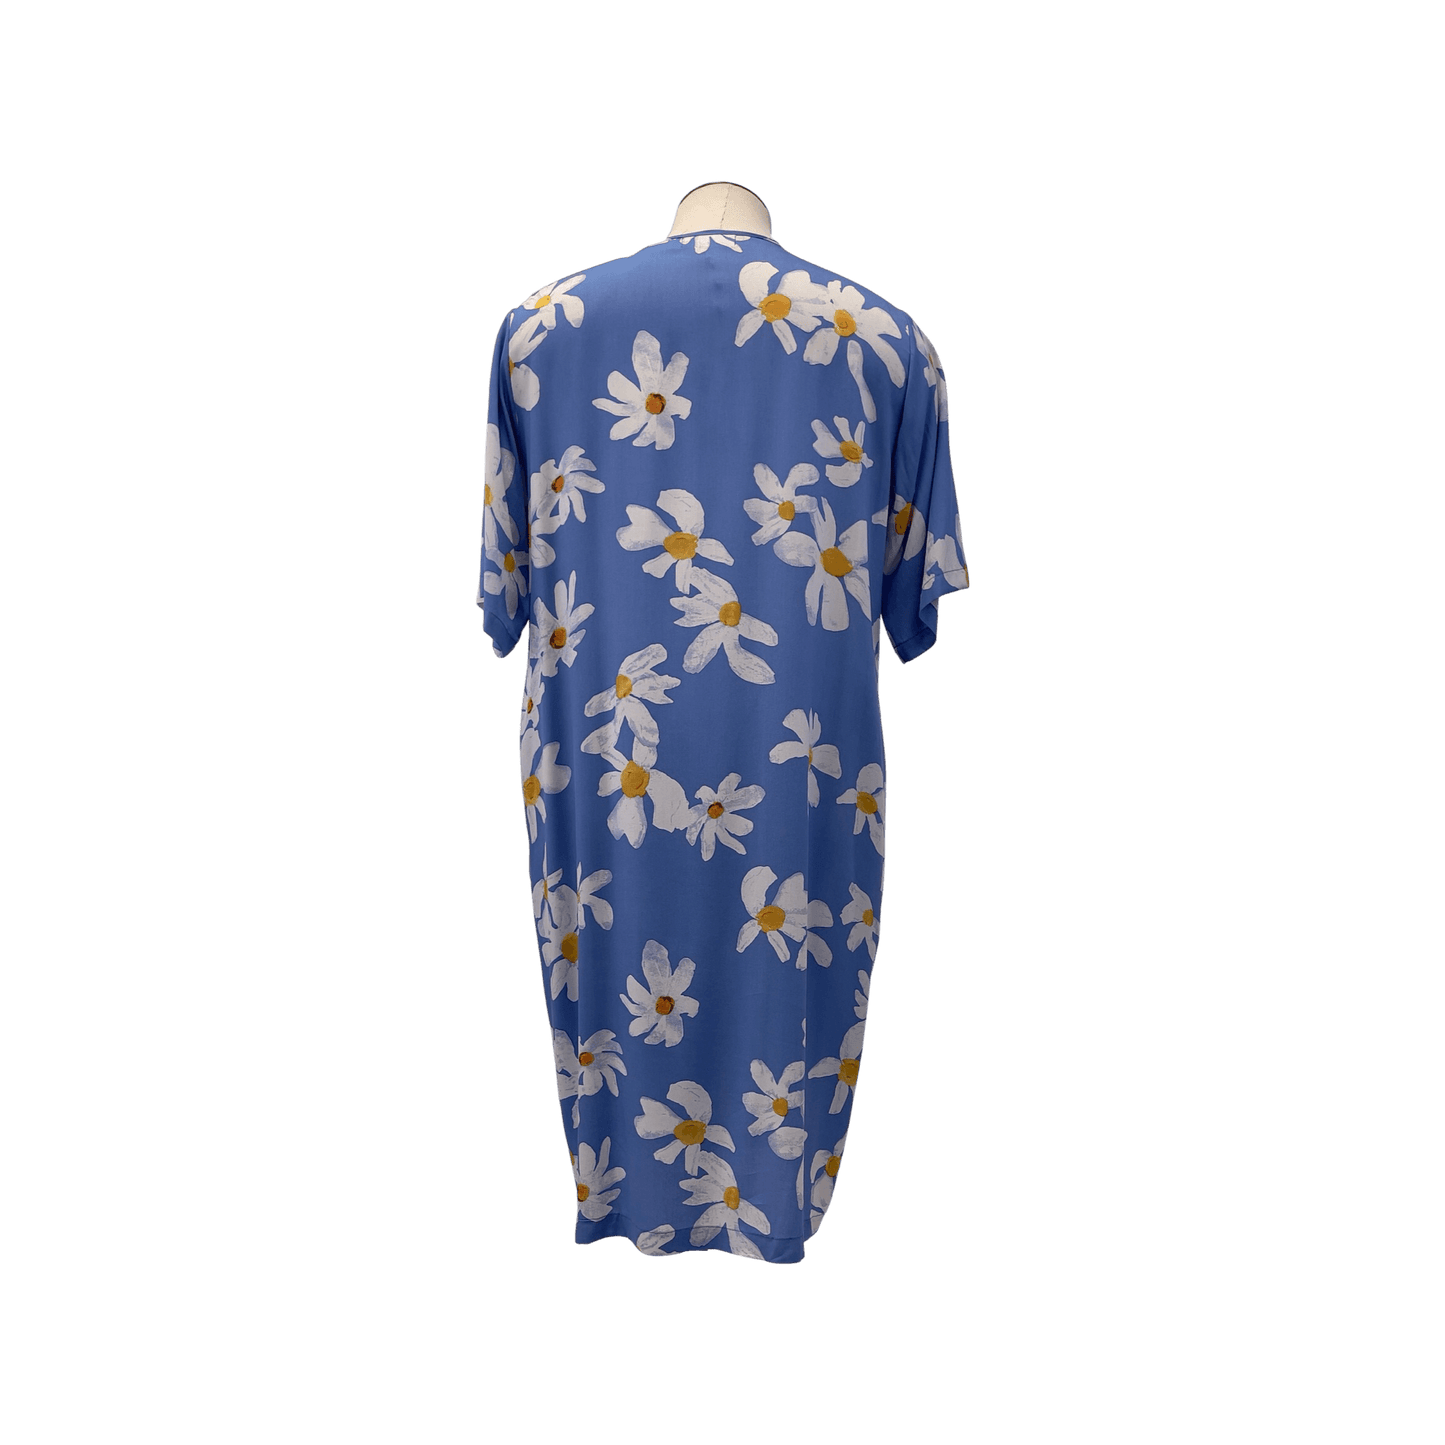 Bloom Clothing NZ,FRESH DAISY DRESS -Sky Blue,$229.00,